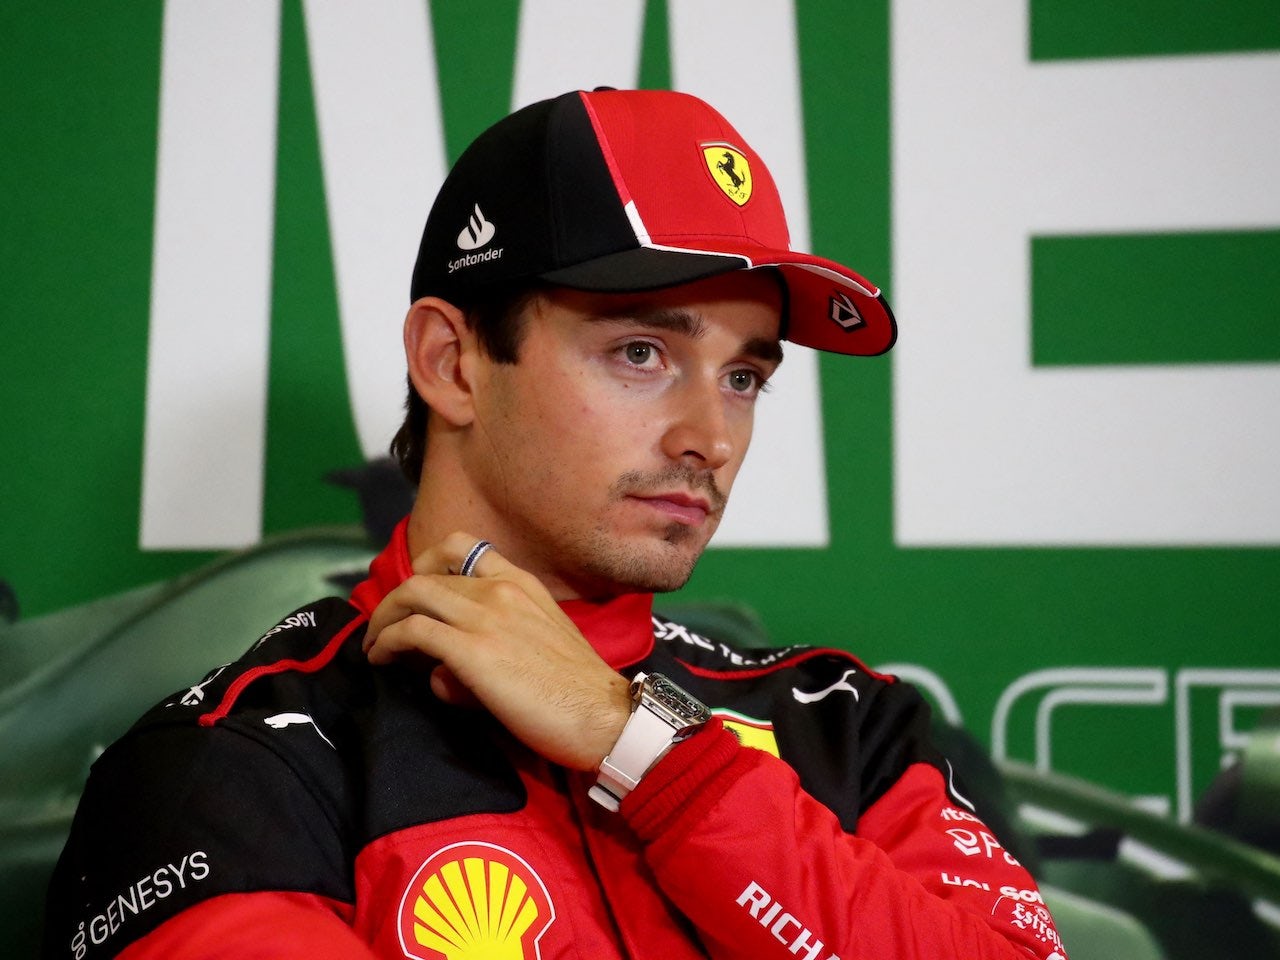 Ferrari were 'bluffing' before qualifying surge - Marko